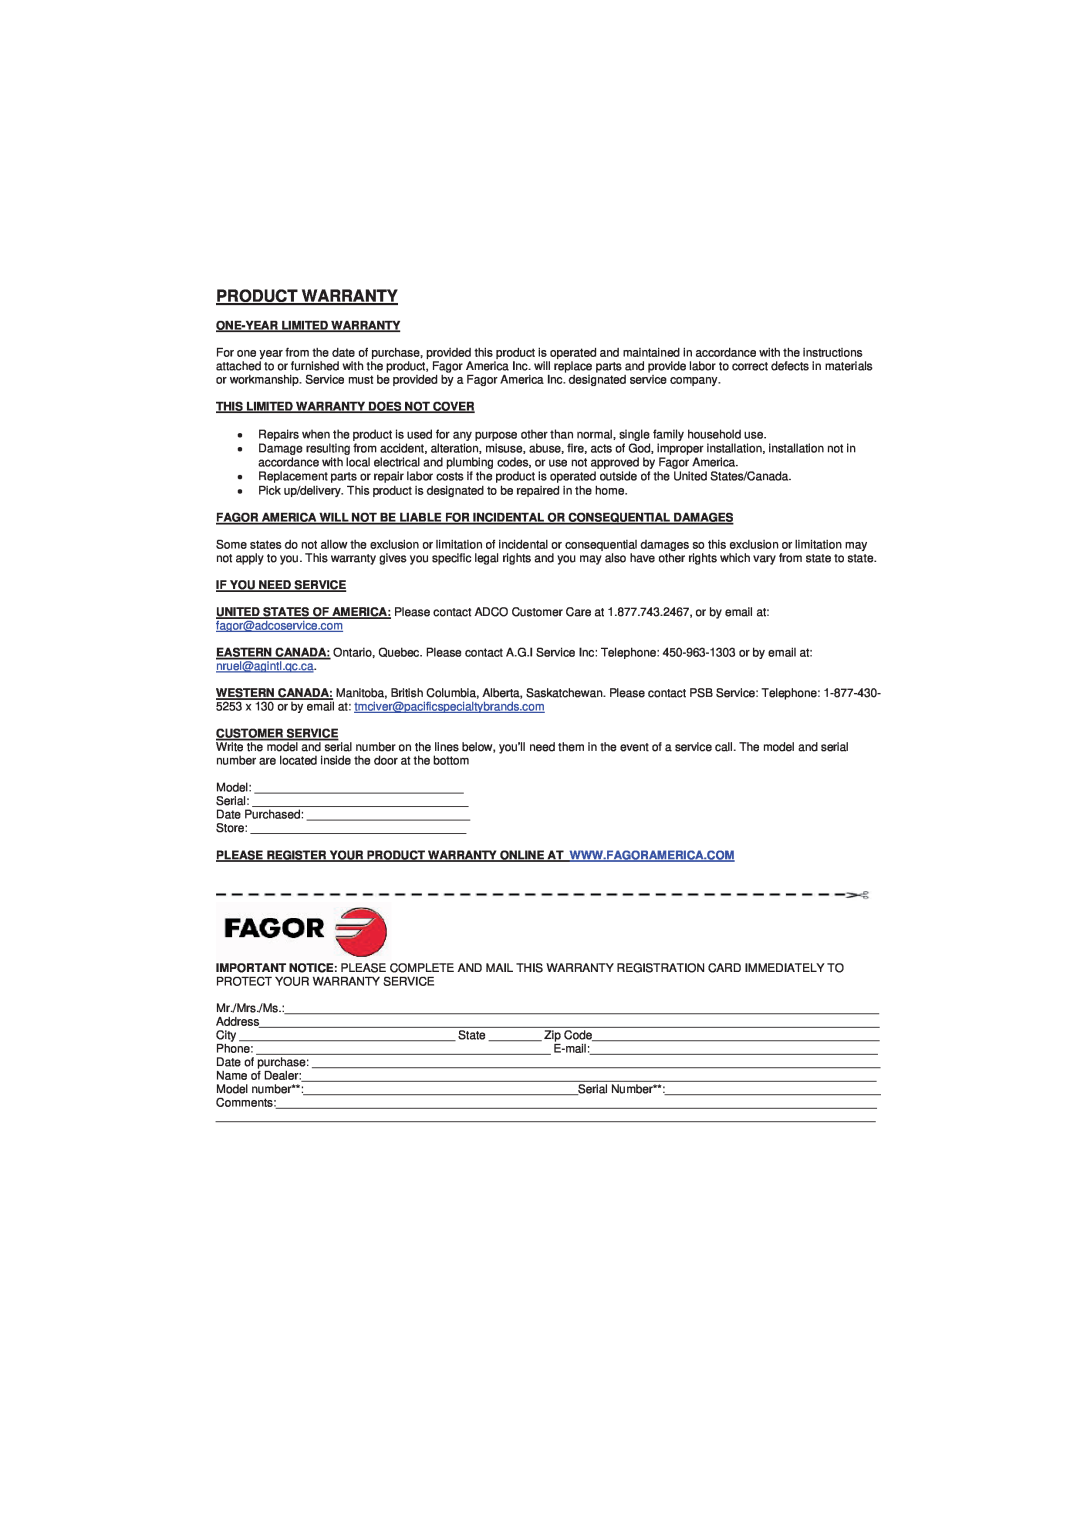 Fagor America 5HA-200 RX, 5HA-200 LX Product Warranty, One-Year Limited Warranty, This Limited Warranty Does Not Cover 